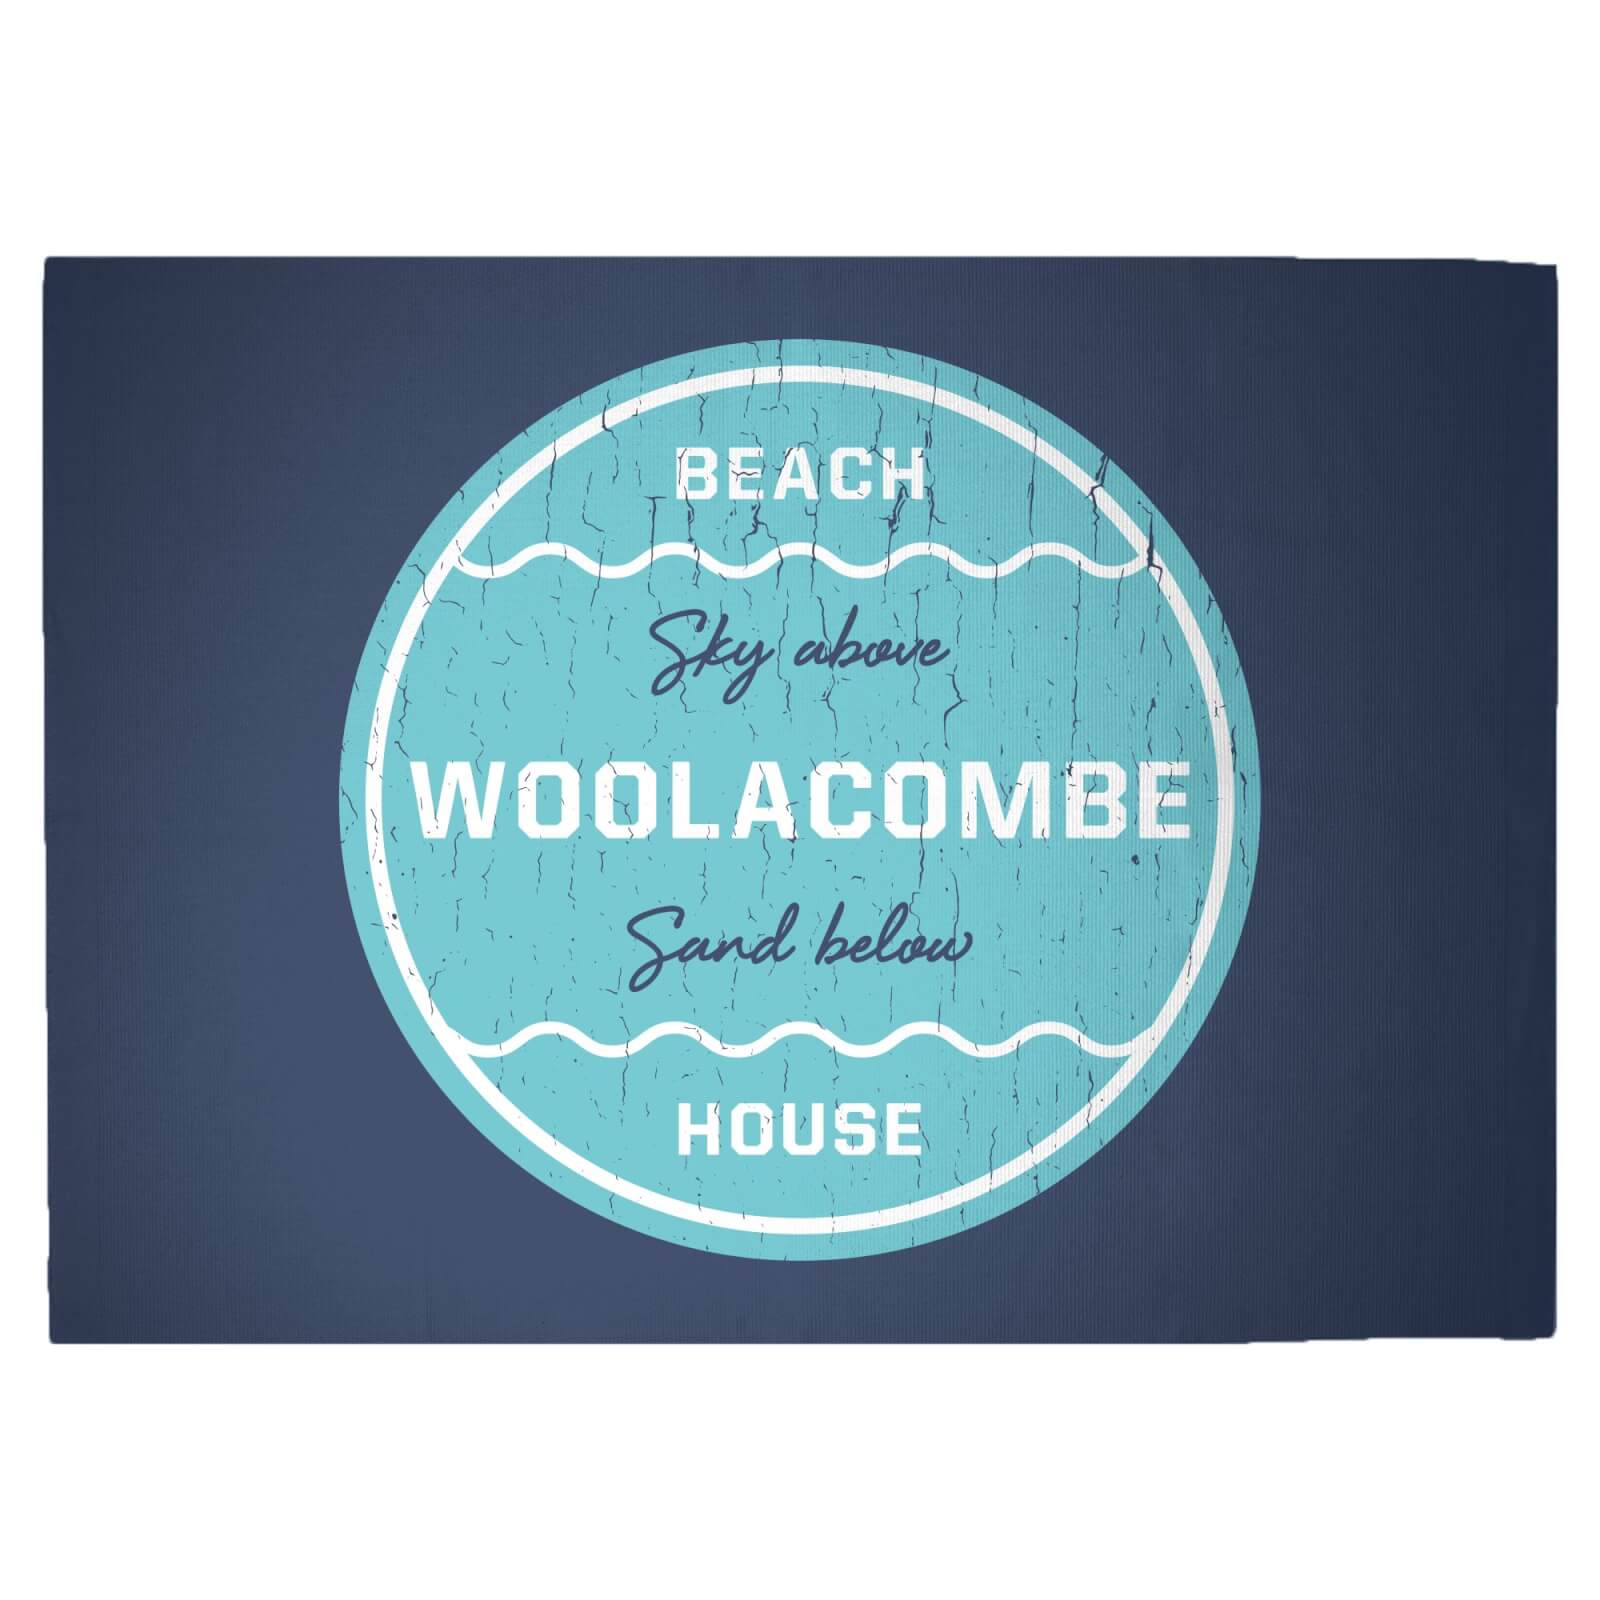 Woolacombe Beach Badge Woven Rug - Large